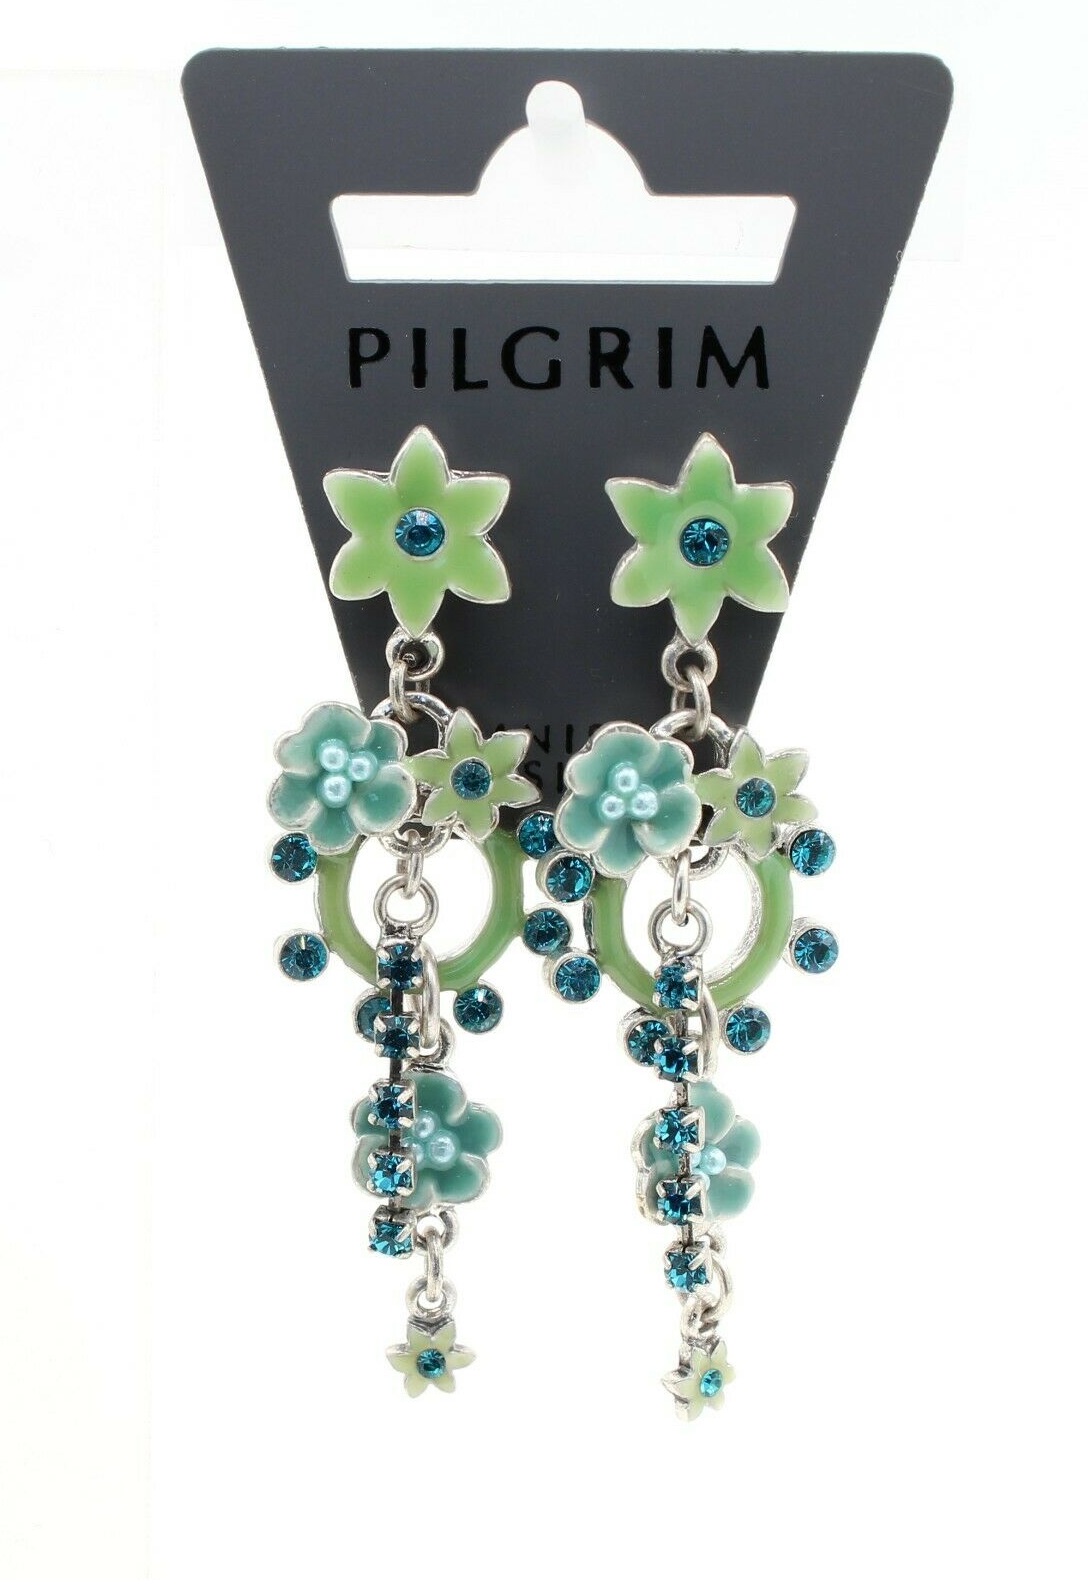 PILGRIM - Enchanted Flower - Longer Drop Earrings - Silver Plate/Aqua Blues BNWT